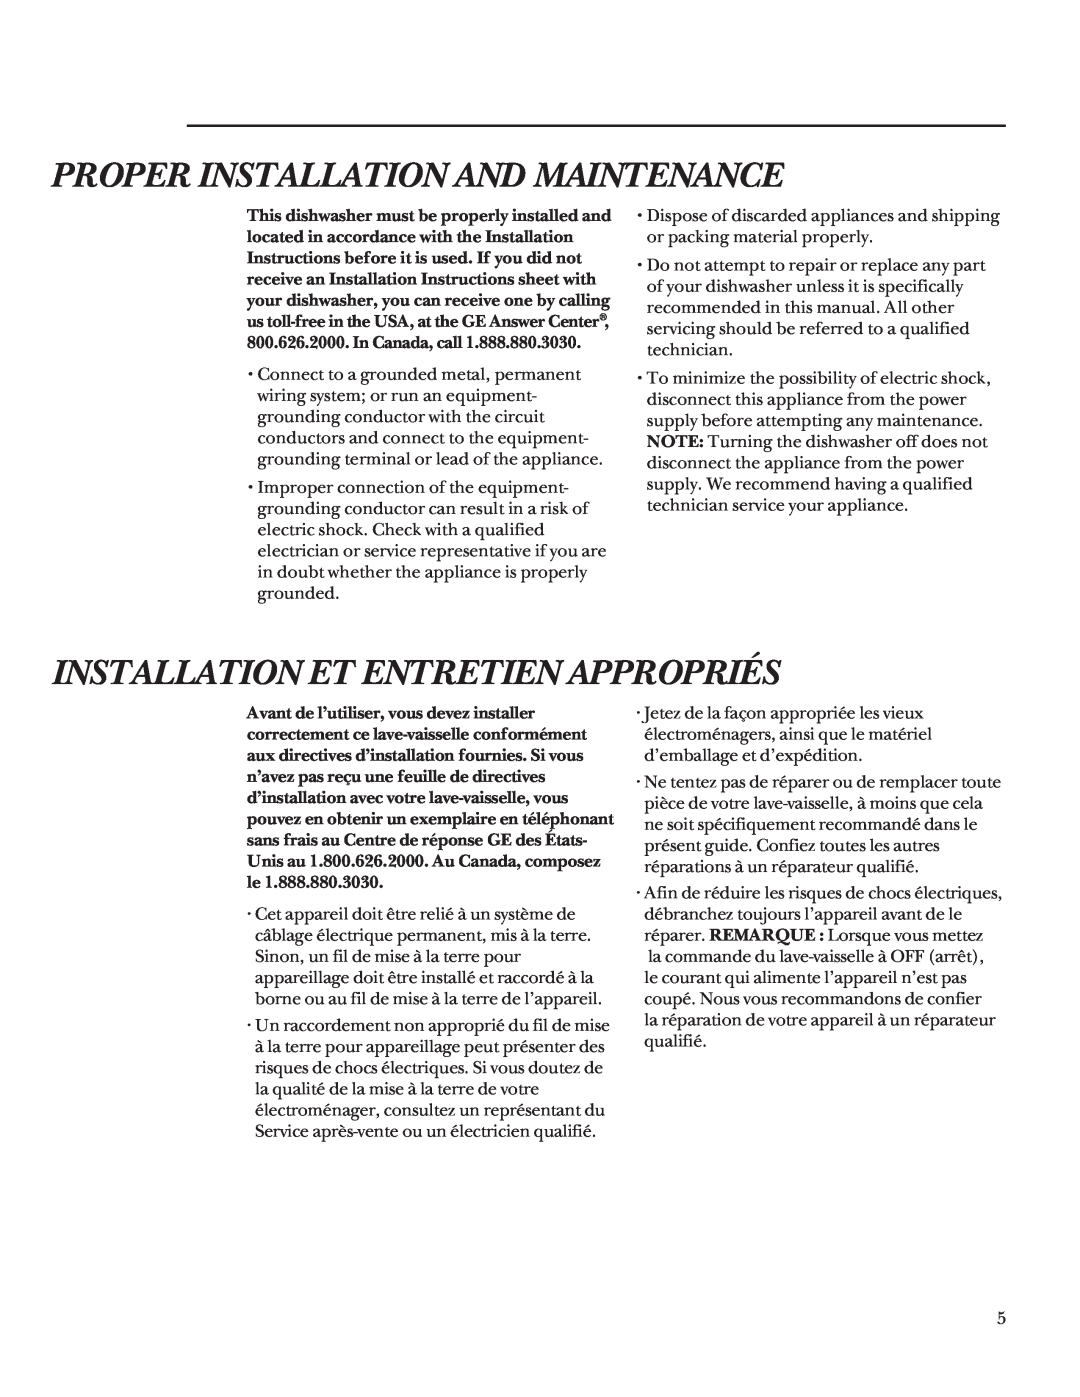 GE Monogram ZBD5600, ZBD5900, ZBD5700 manual Proper Installation And Maintenance, Installation Et Entretien Appropriés 